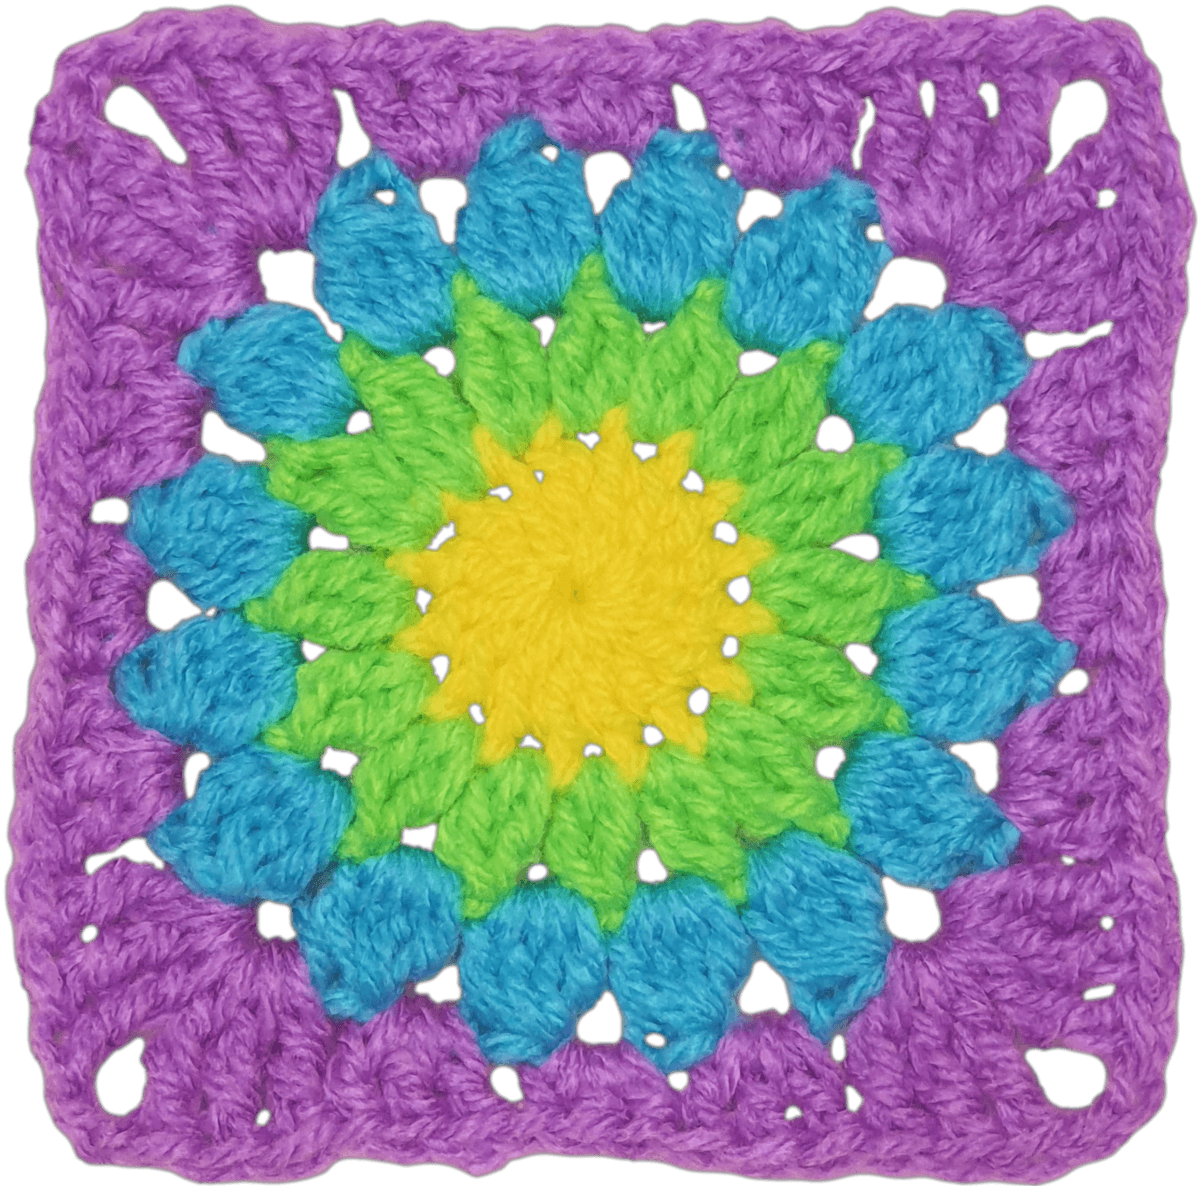 Sunburst Crochet Granny Square - The Secret Yarnery